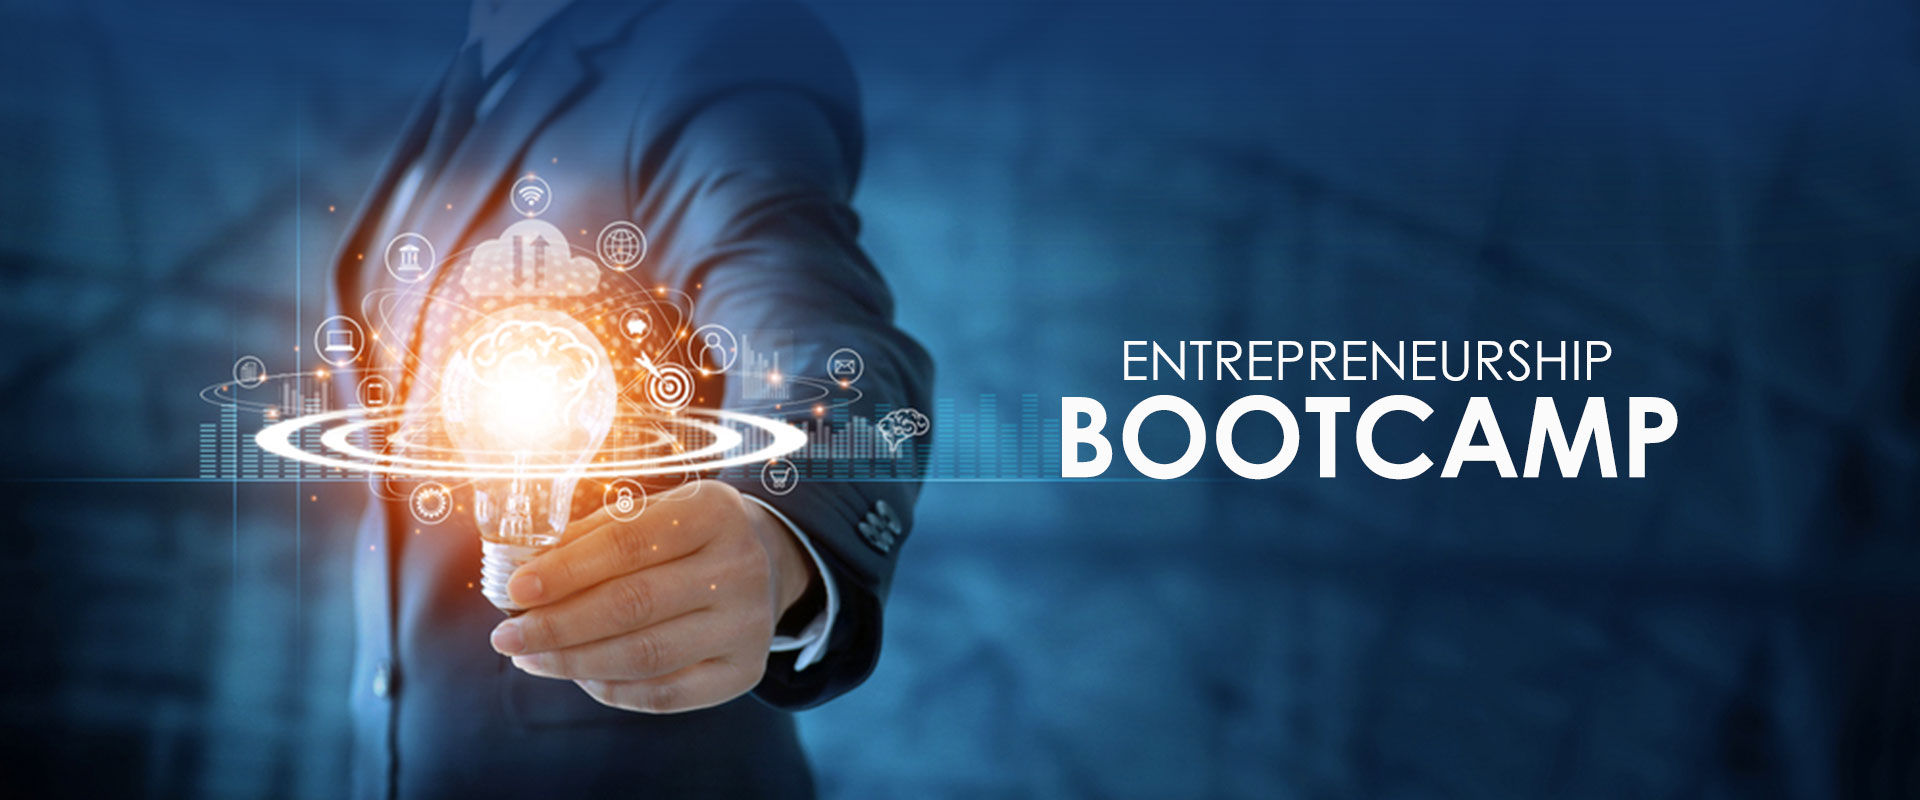 Entrepreneurship Bootcamp Programme